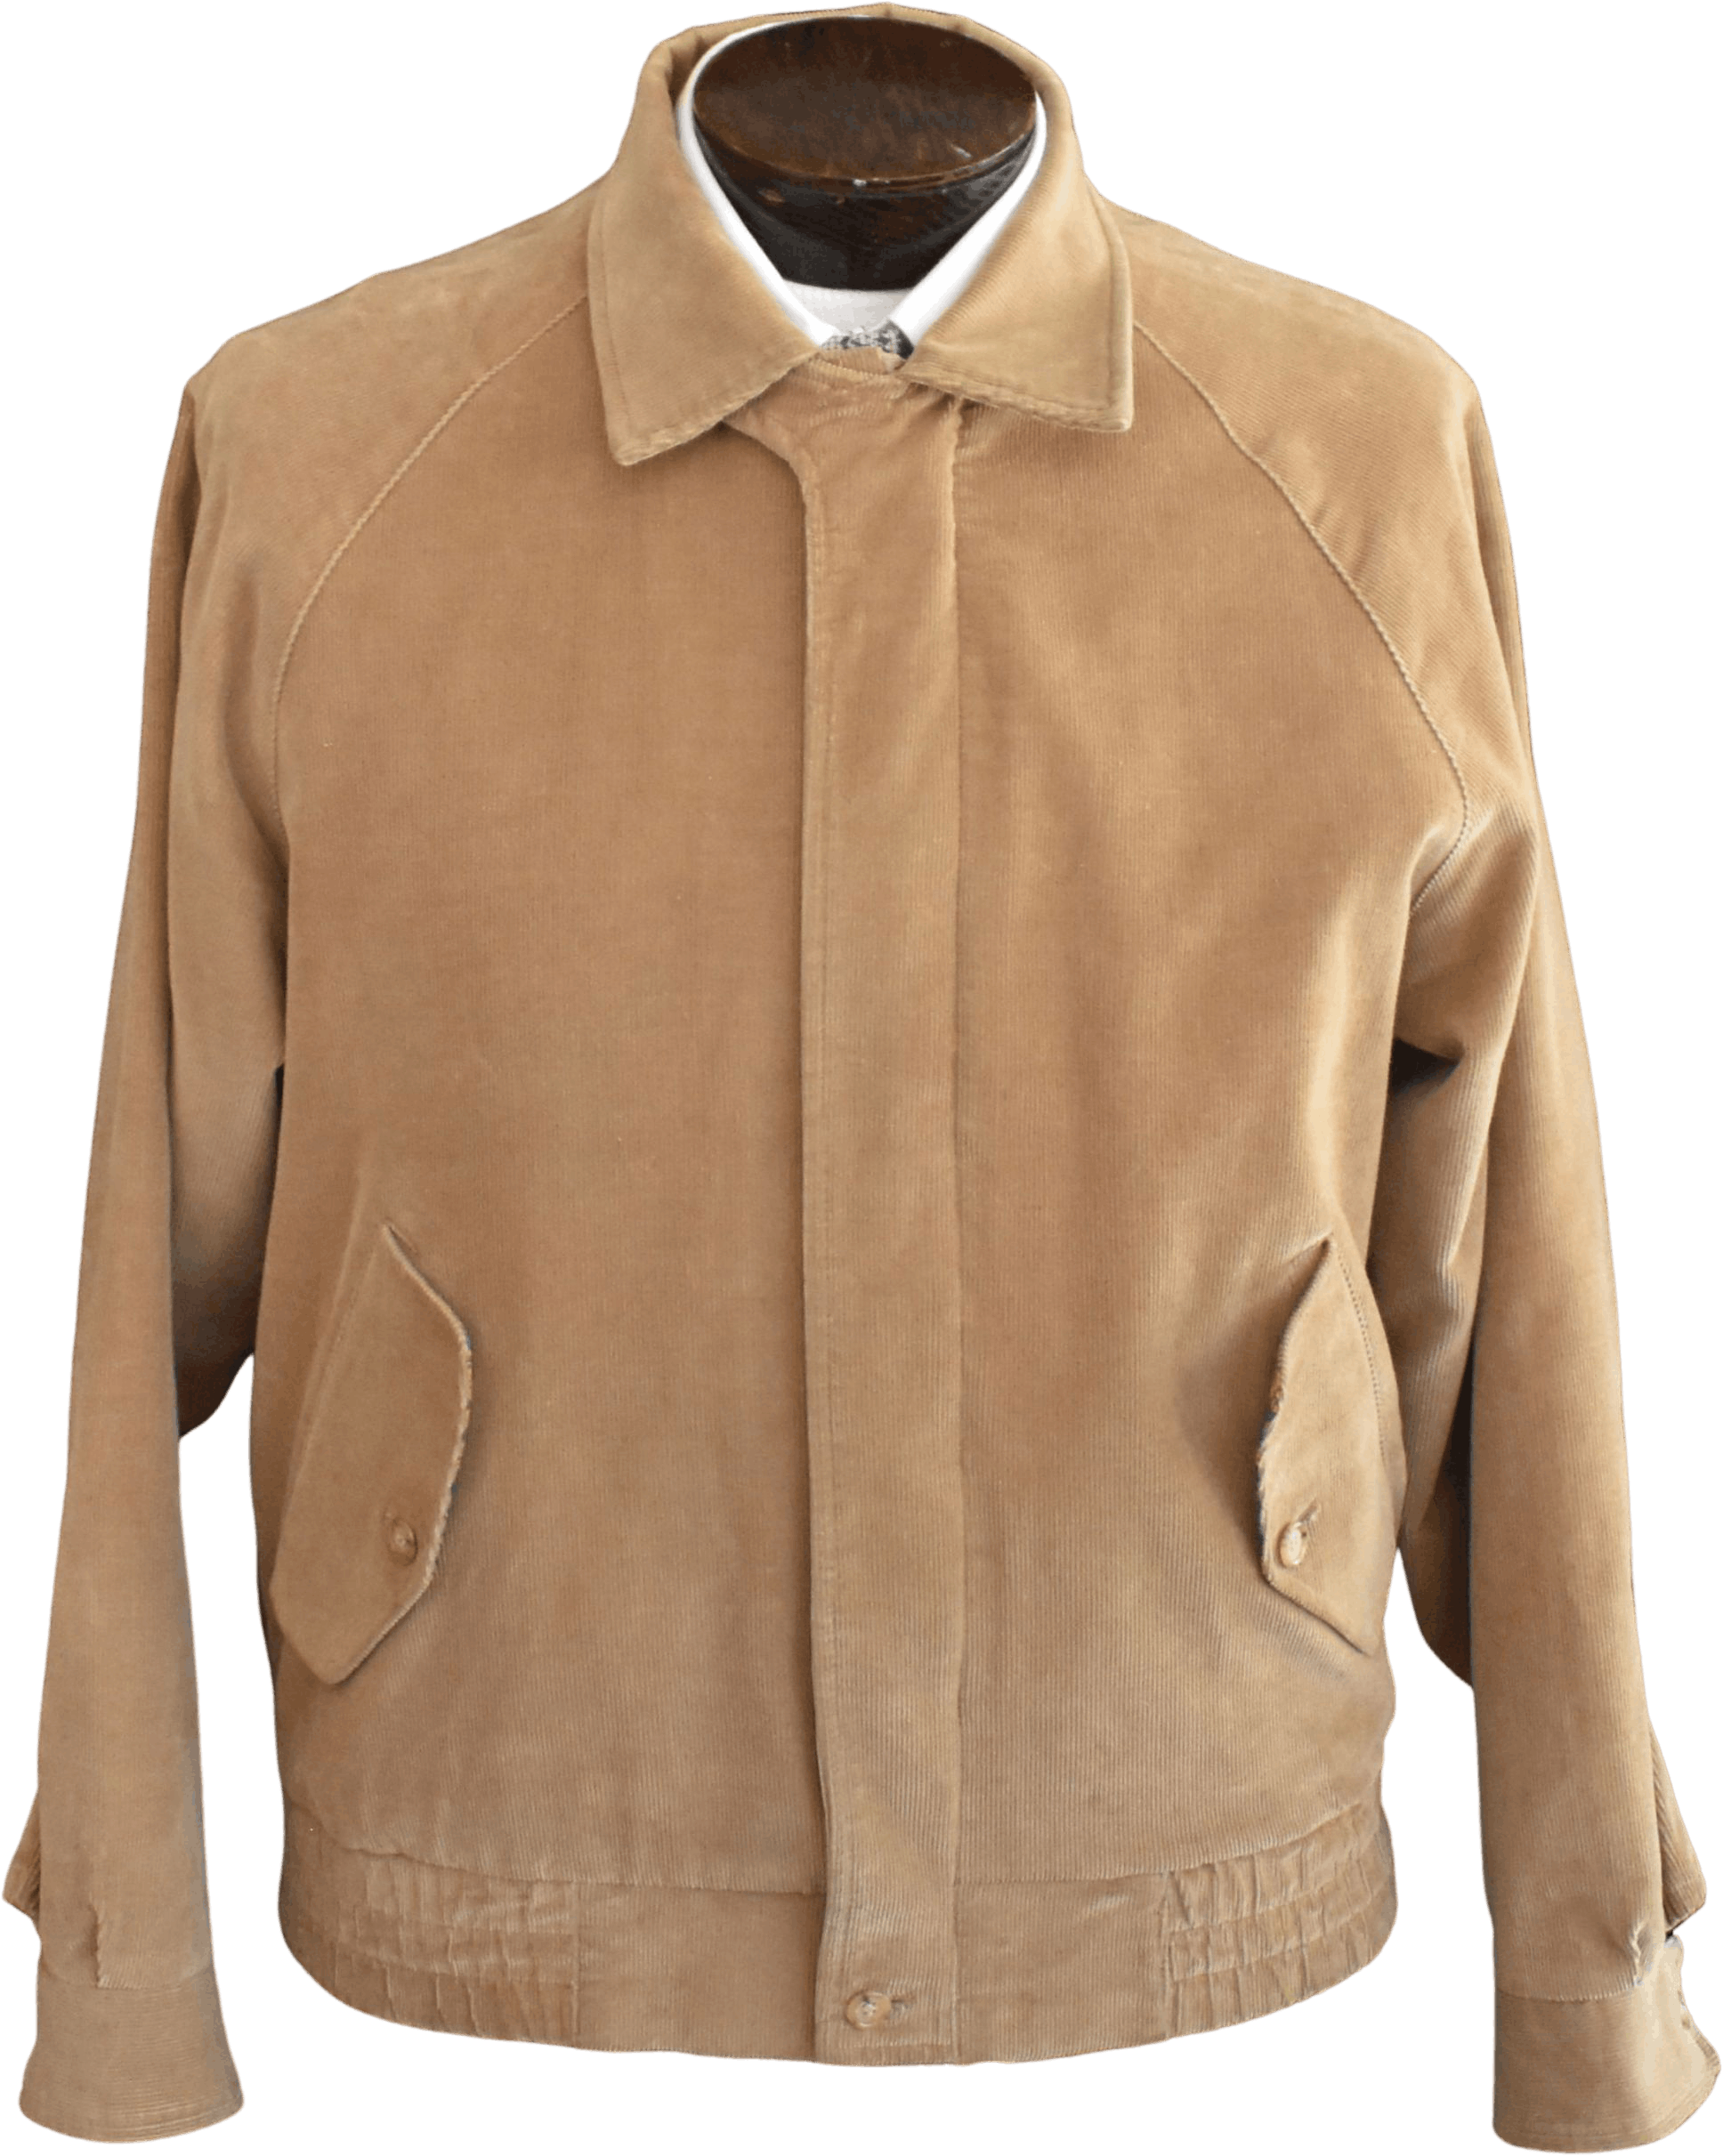 Vintage 80's Corduroy Button Up Bomber Jacket by Reyn Spooner | Shop ...